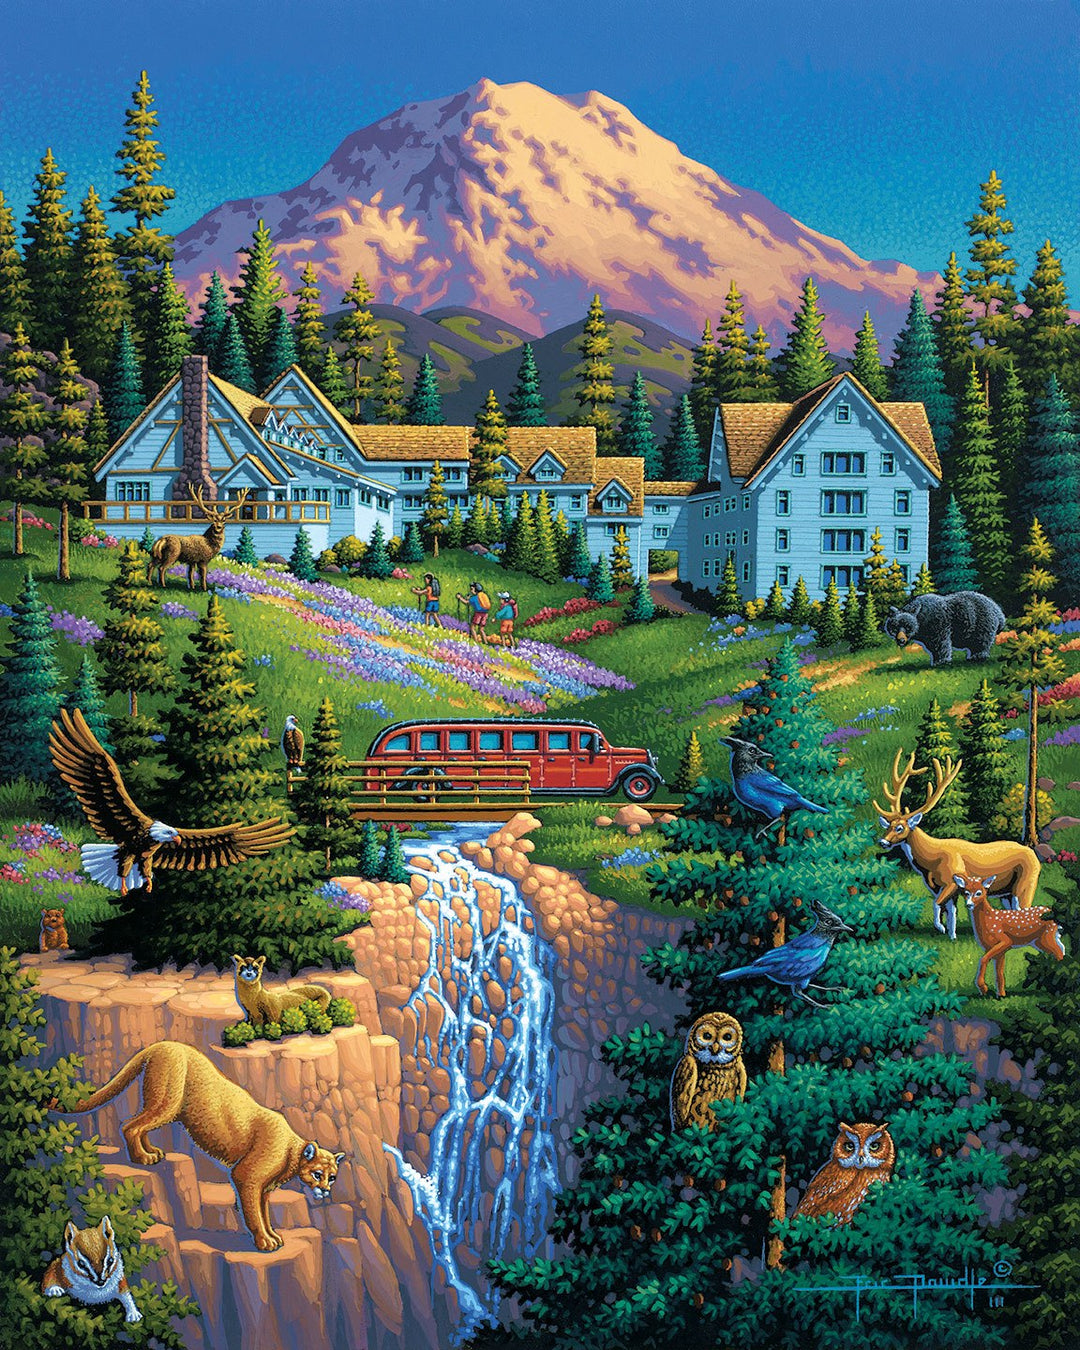 Mount Rainier National Park Poster Print